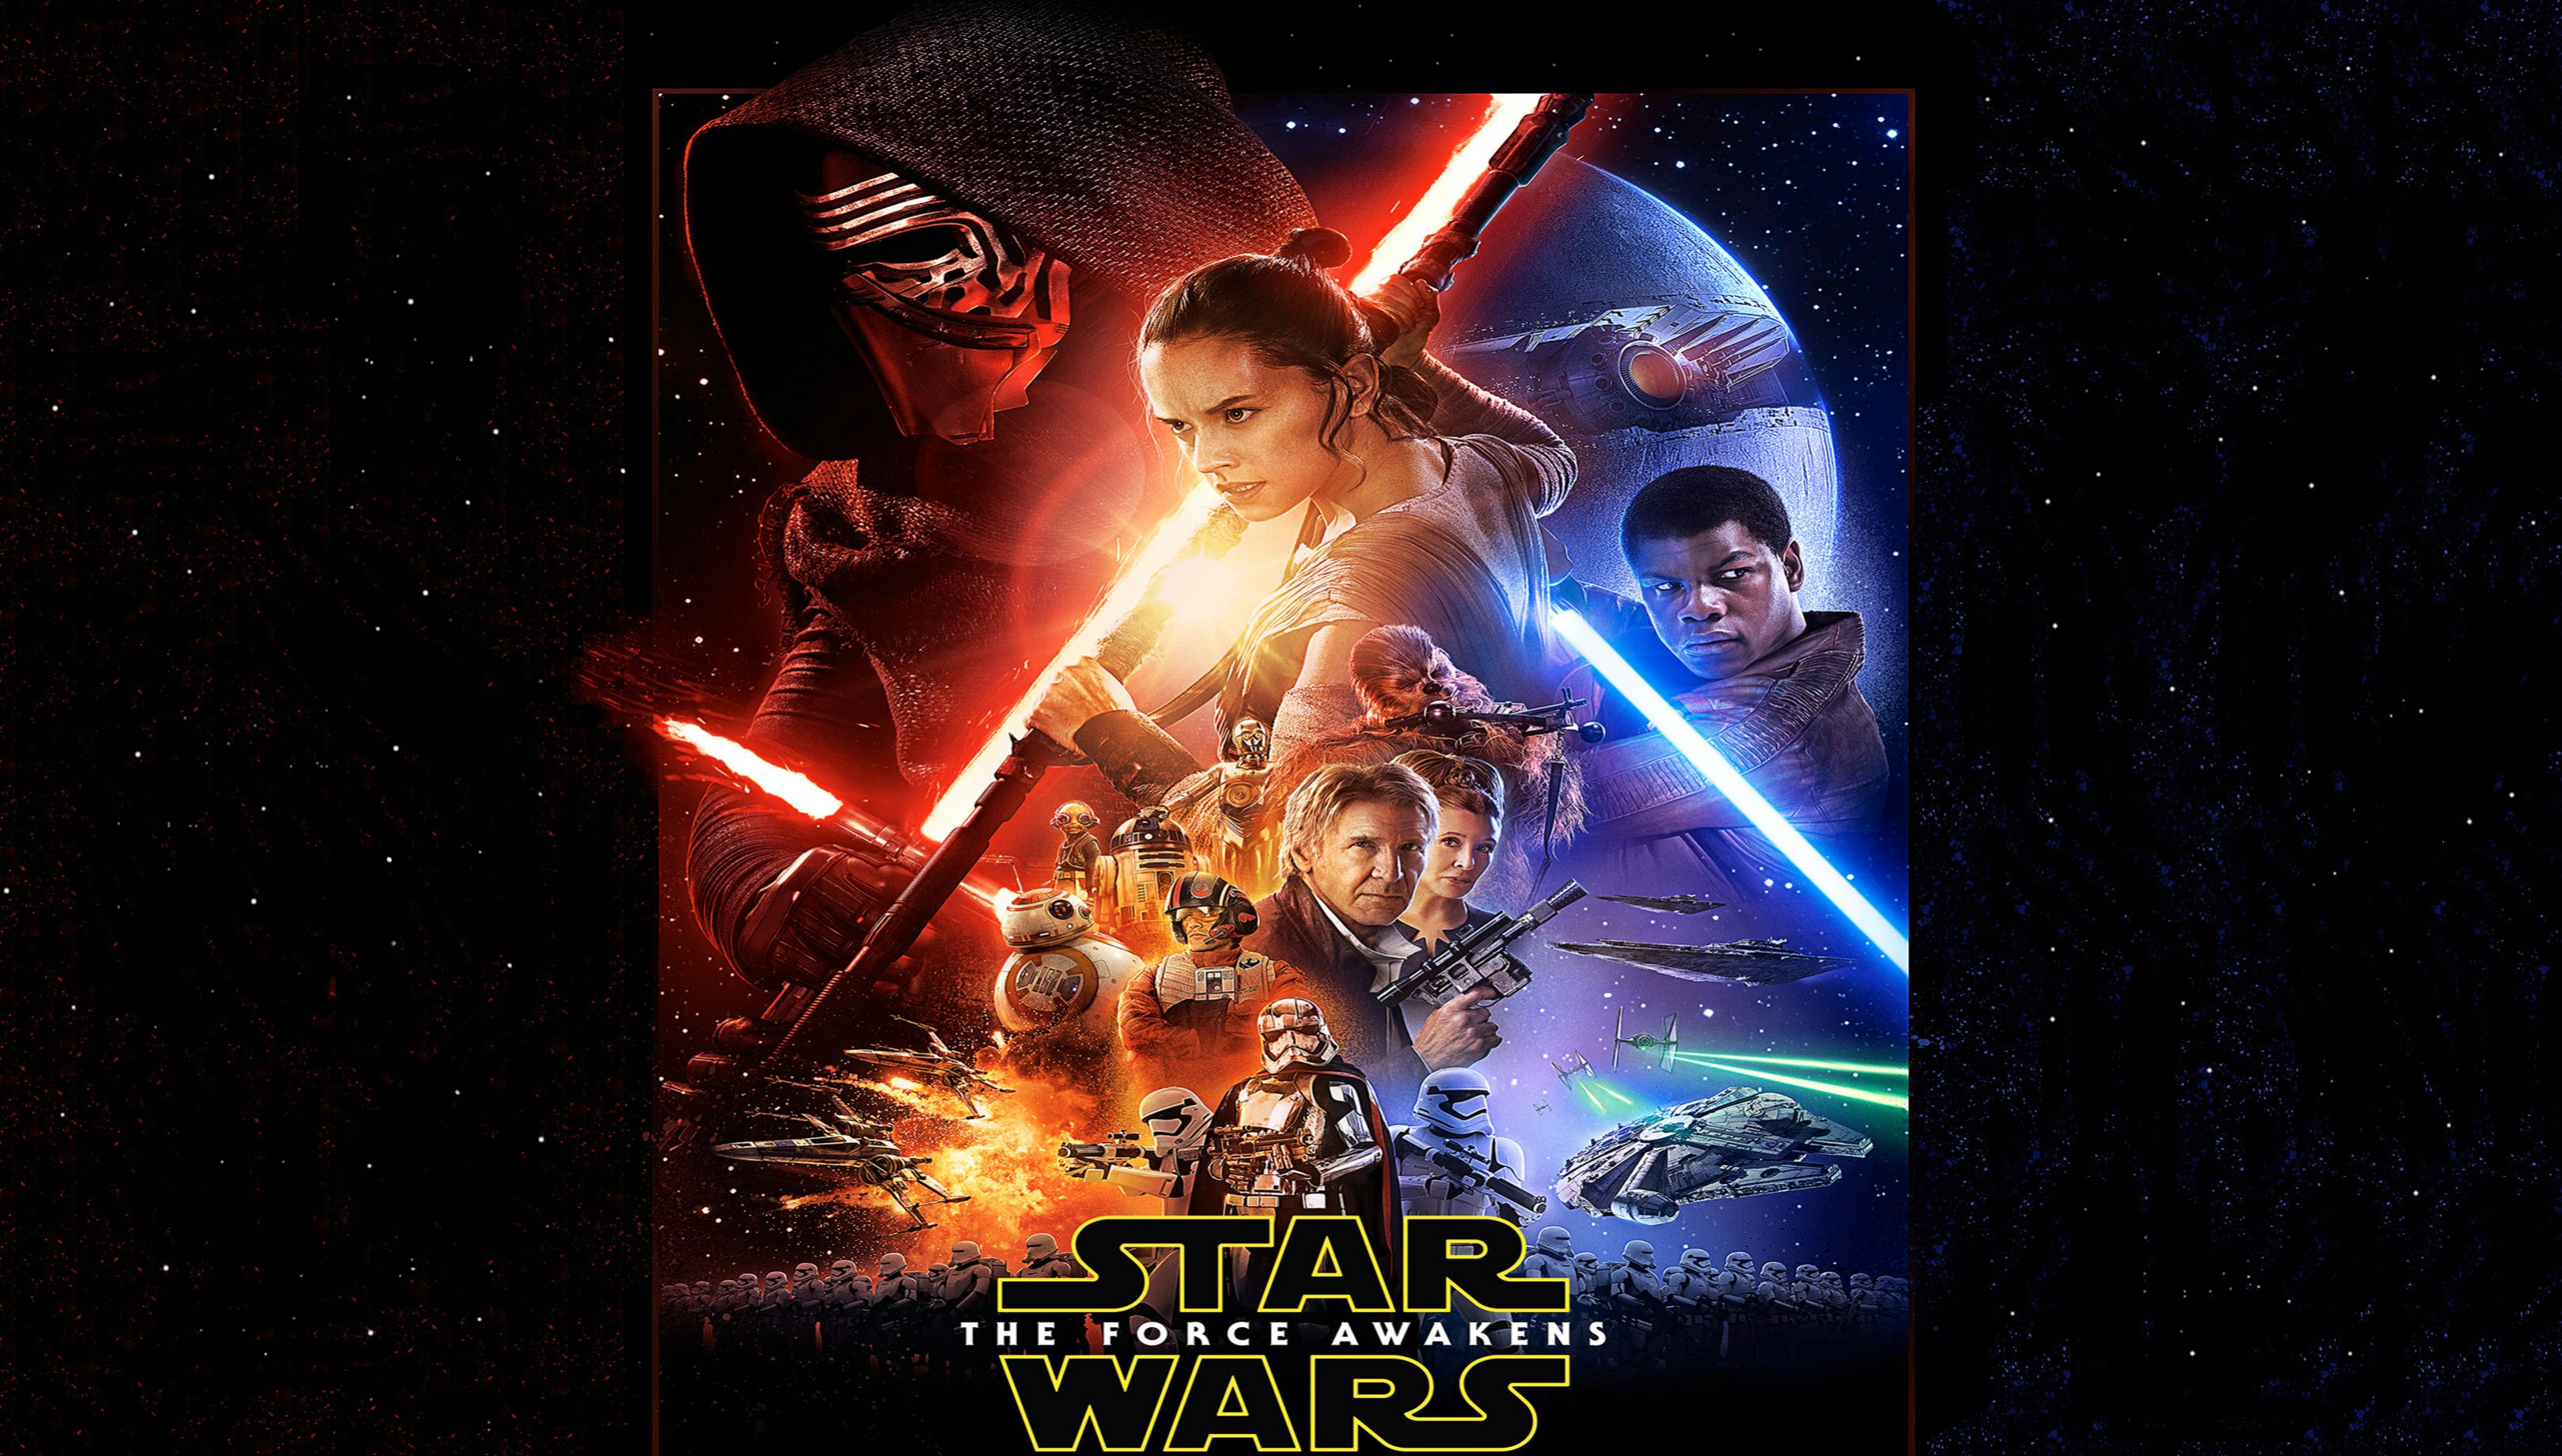 Star Wars The Force Awakens Poster Wallpaper - Imgur